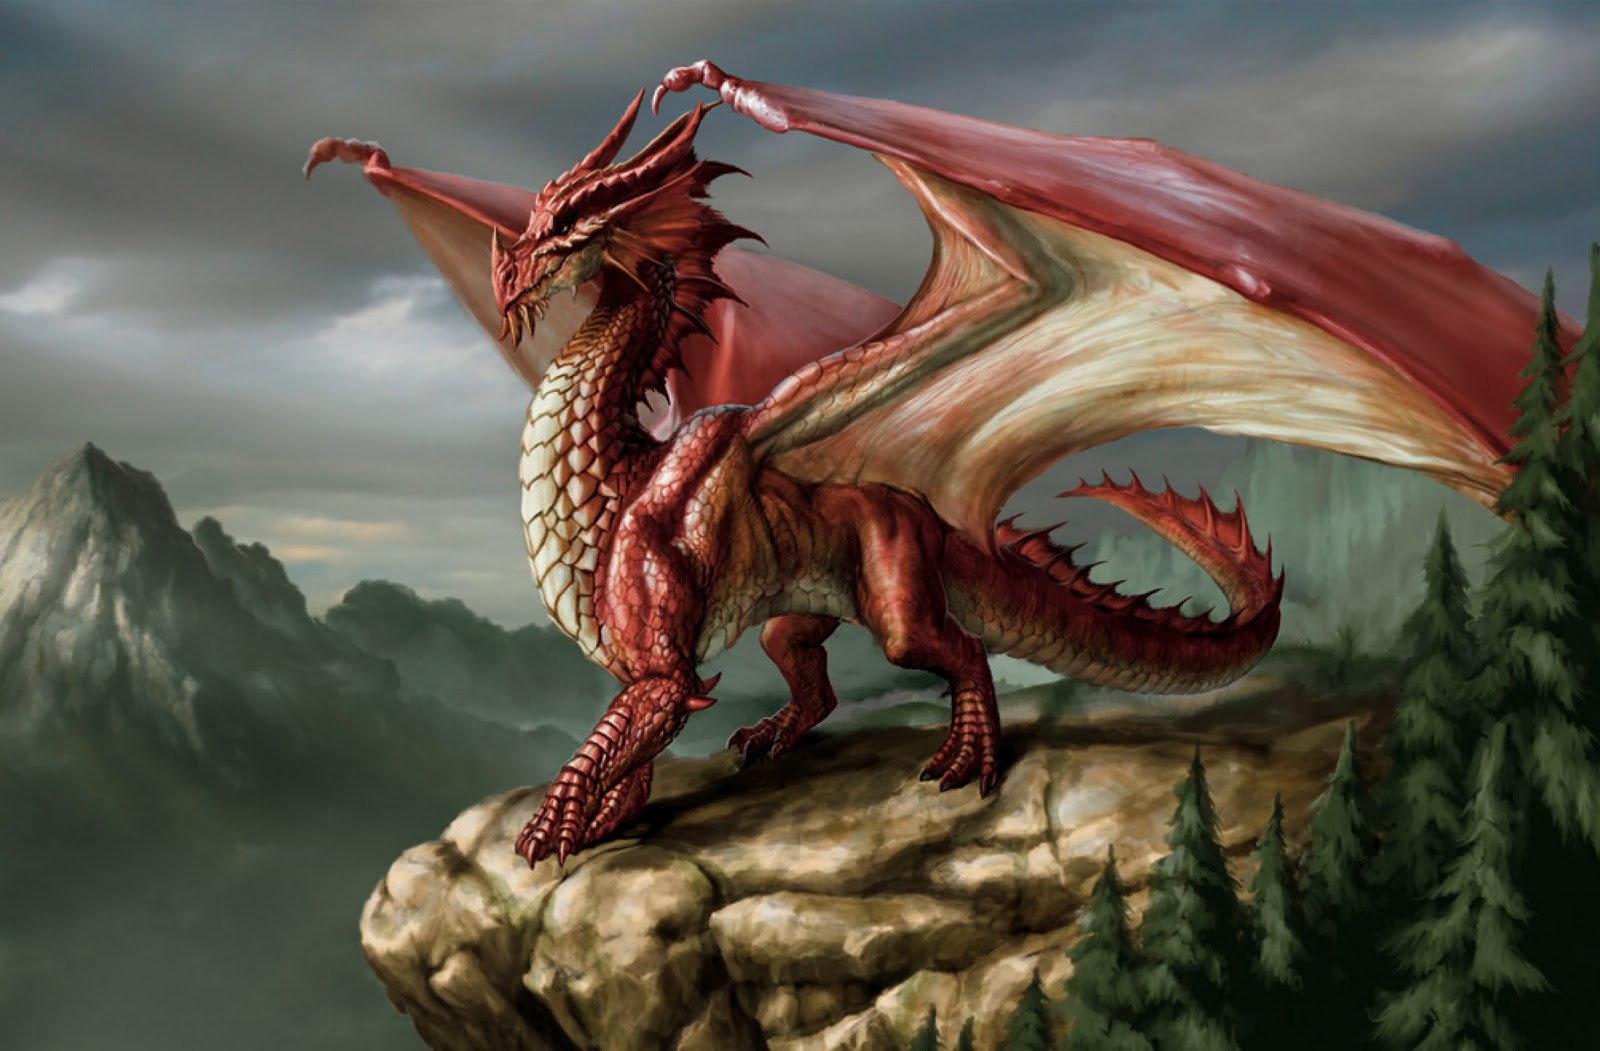 image de dragon